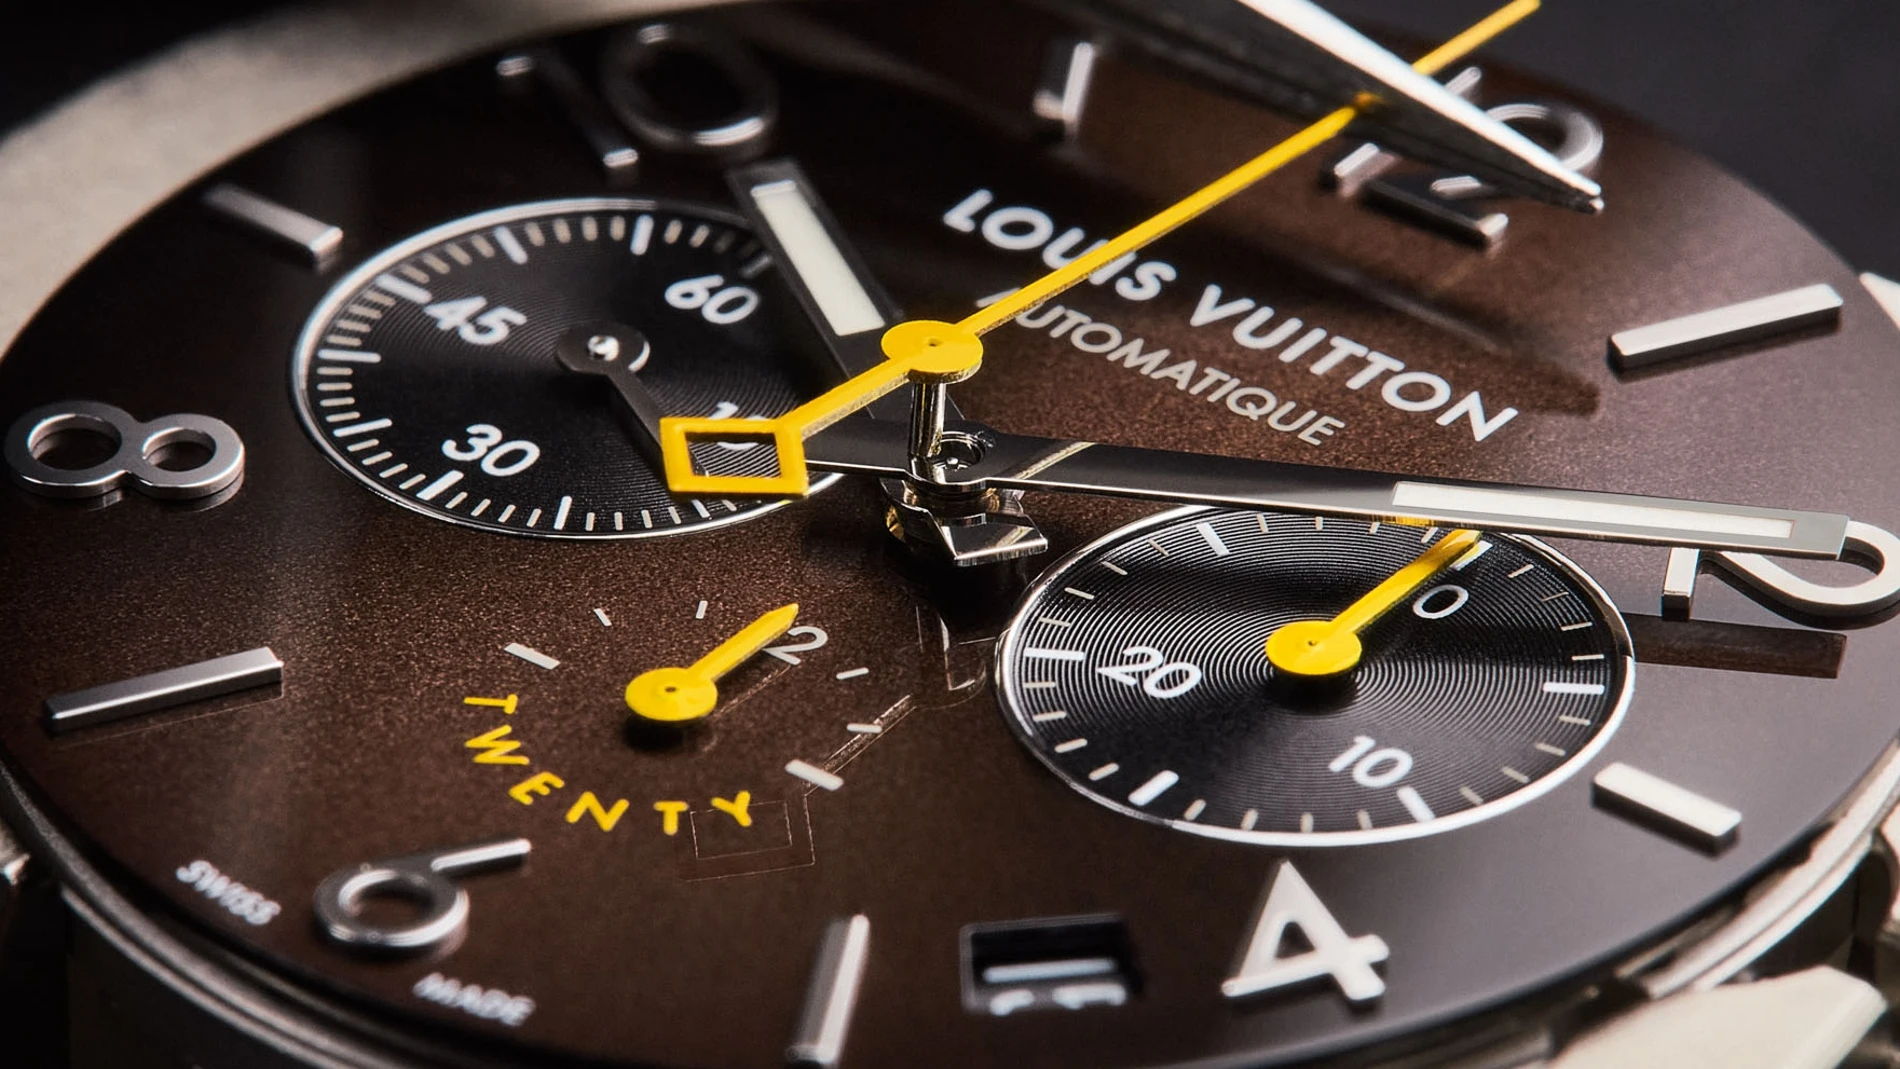 El nuevo reloj Tambour Monogram de Louis Vuitton